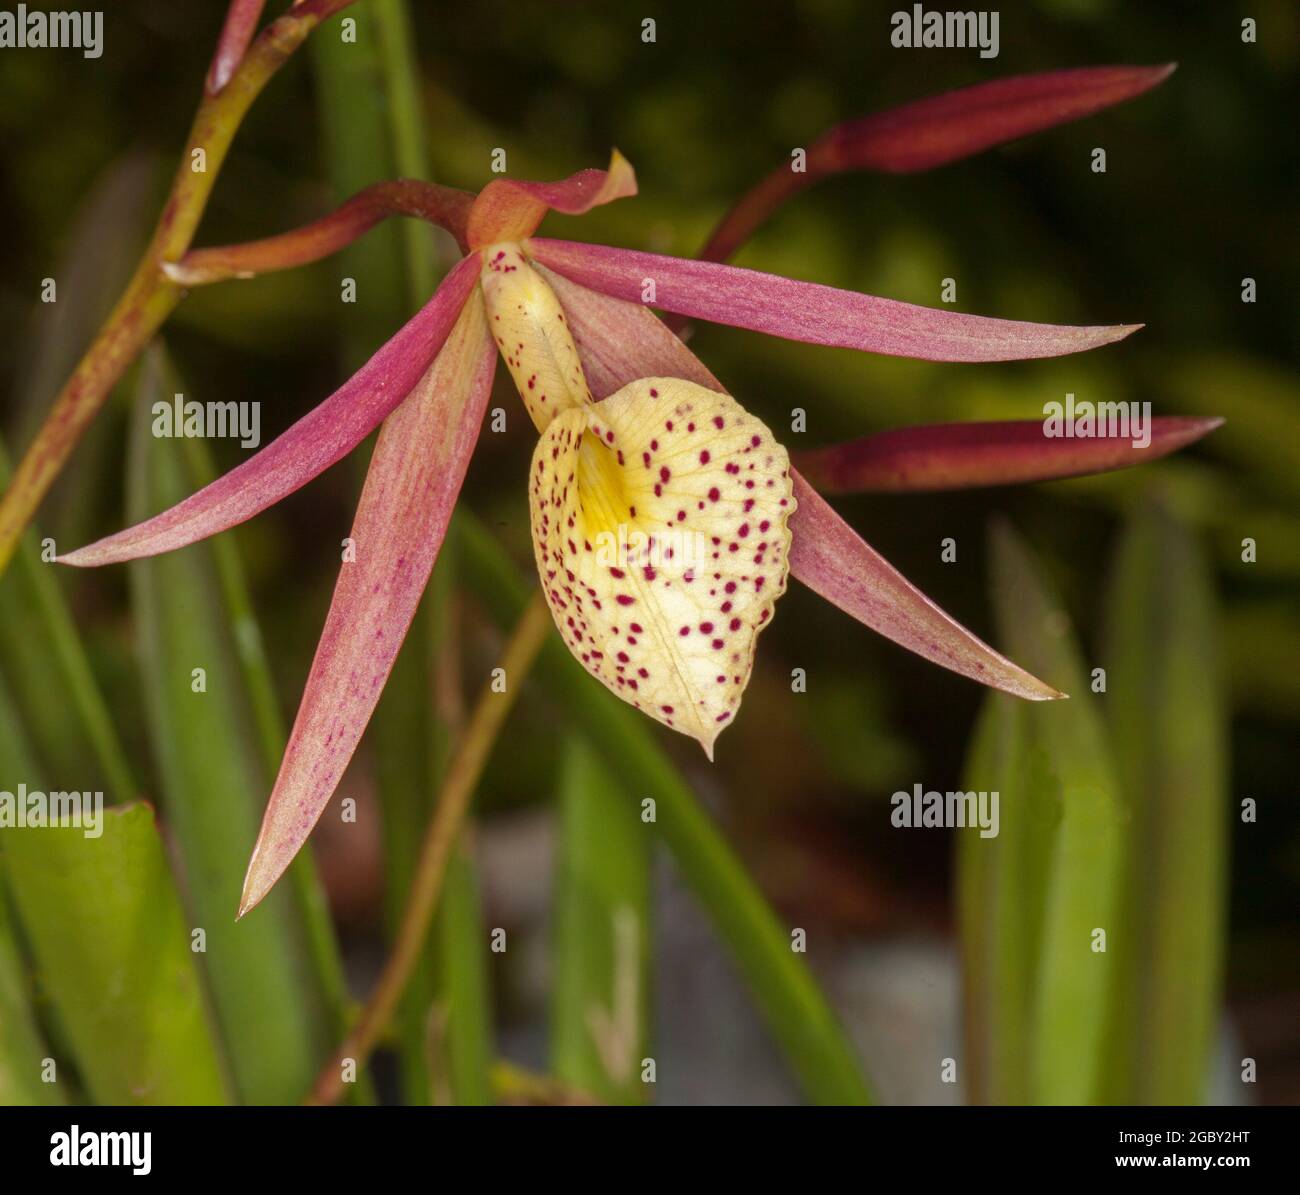 Yellow speckled flower of Brassocattleya orchid 'Yellow Bird' on background of dark green leaves Stock Photo